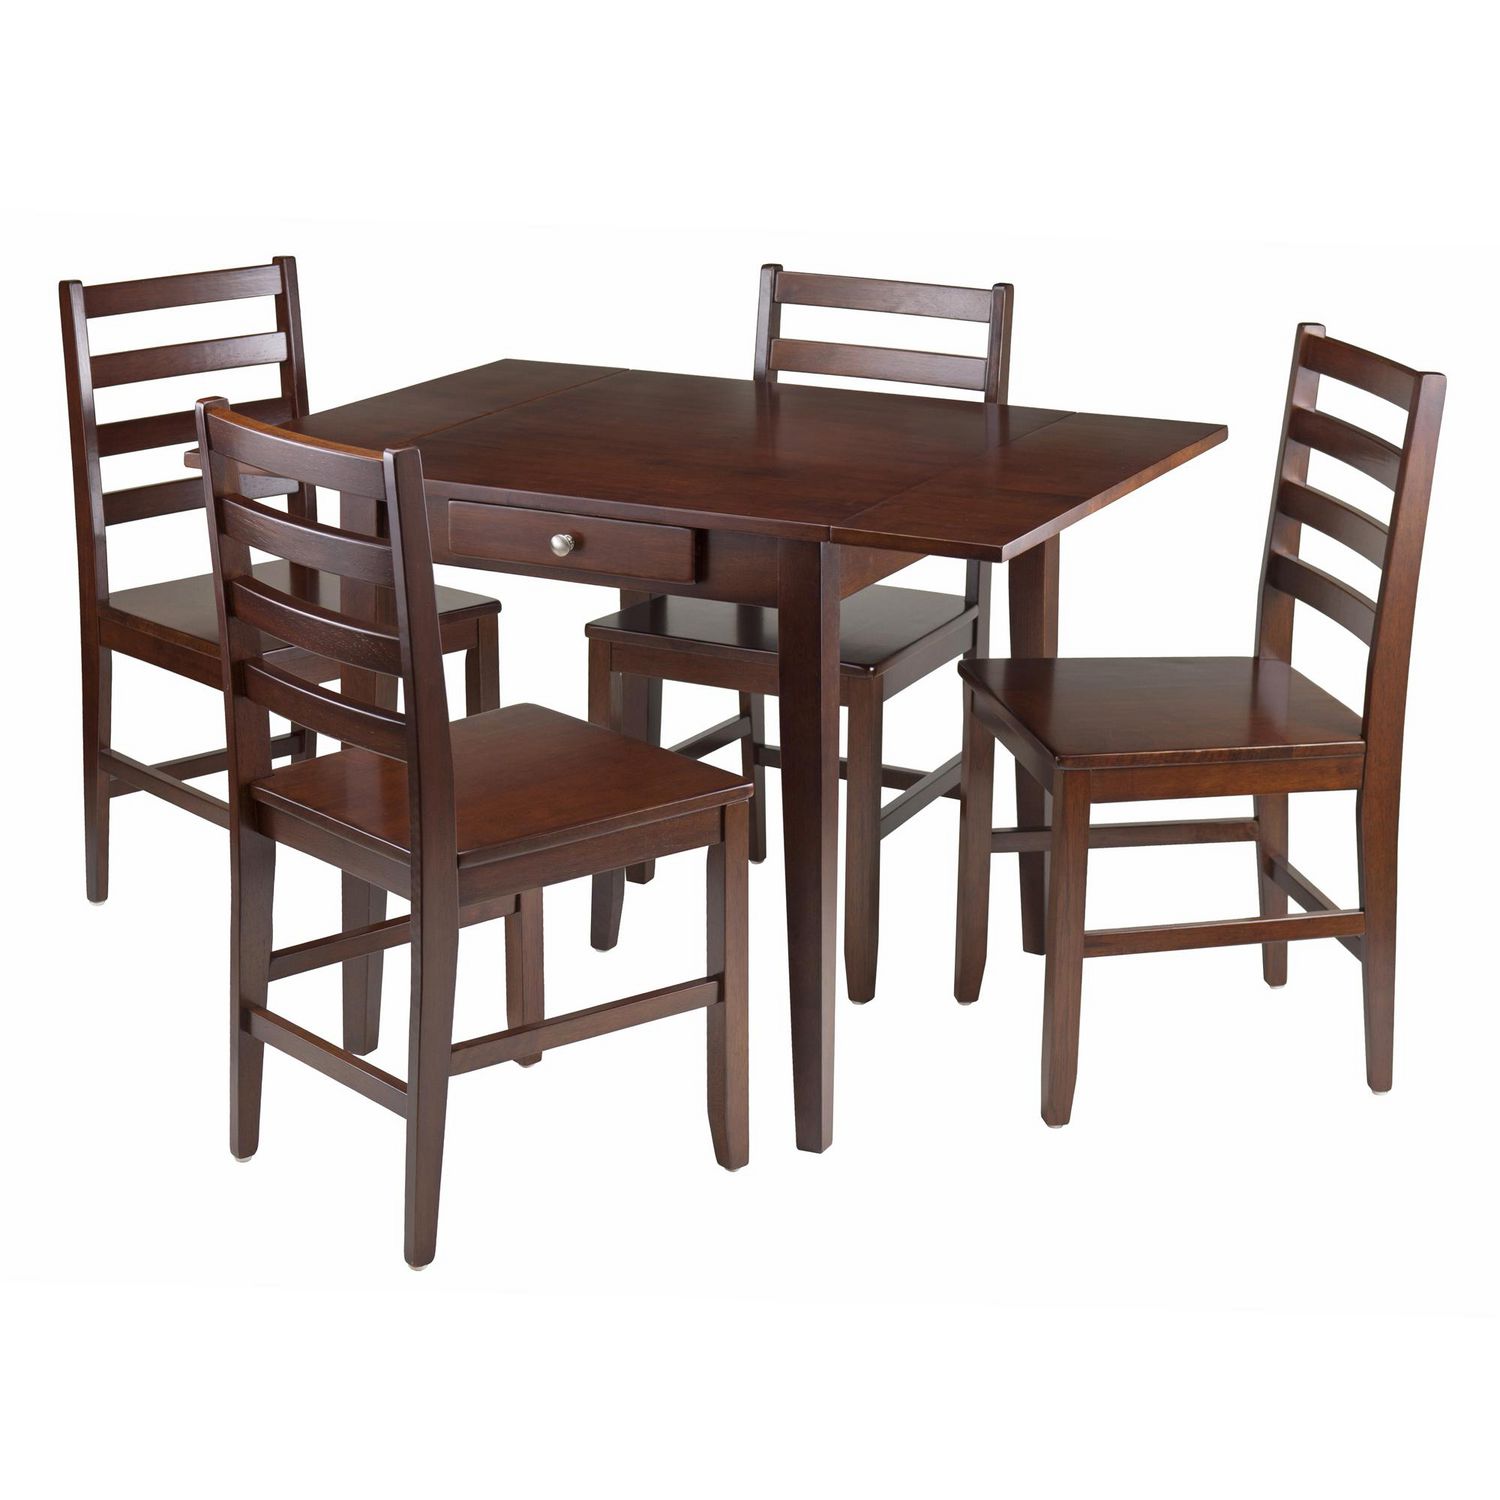 Hamilton 5PC Dining table & chairs | Walmart Canada